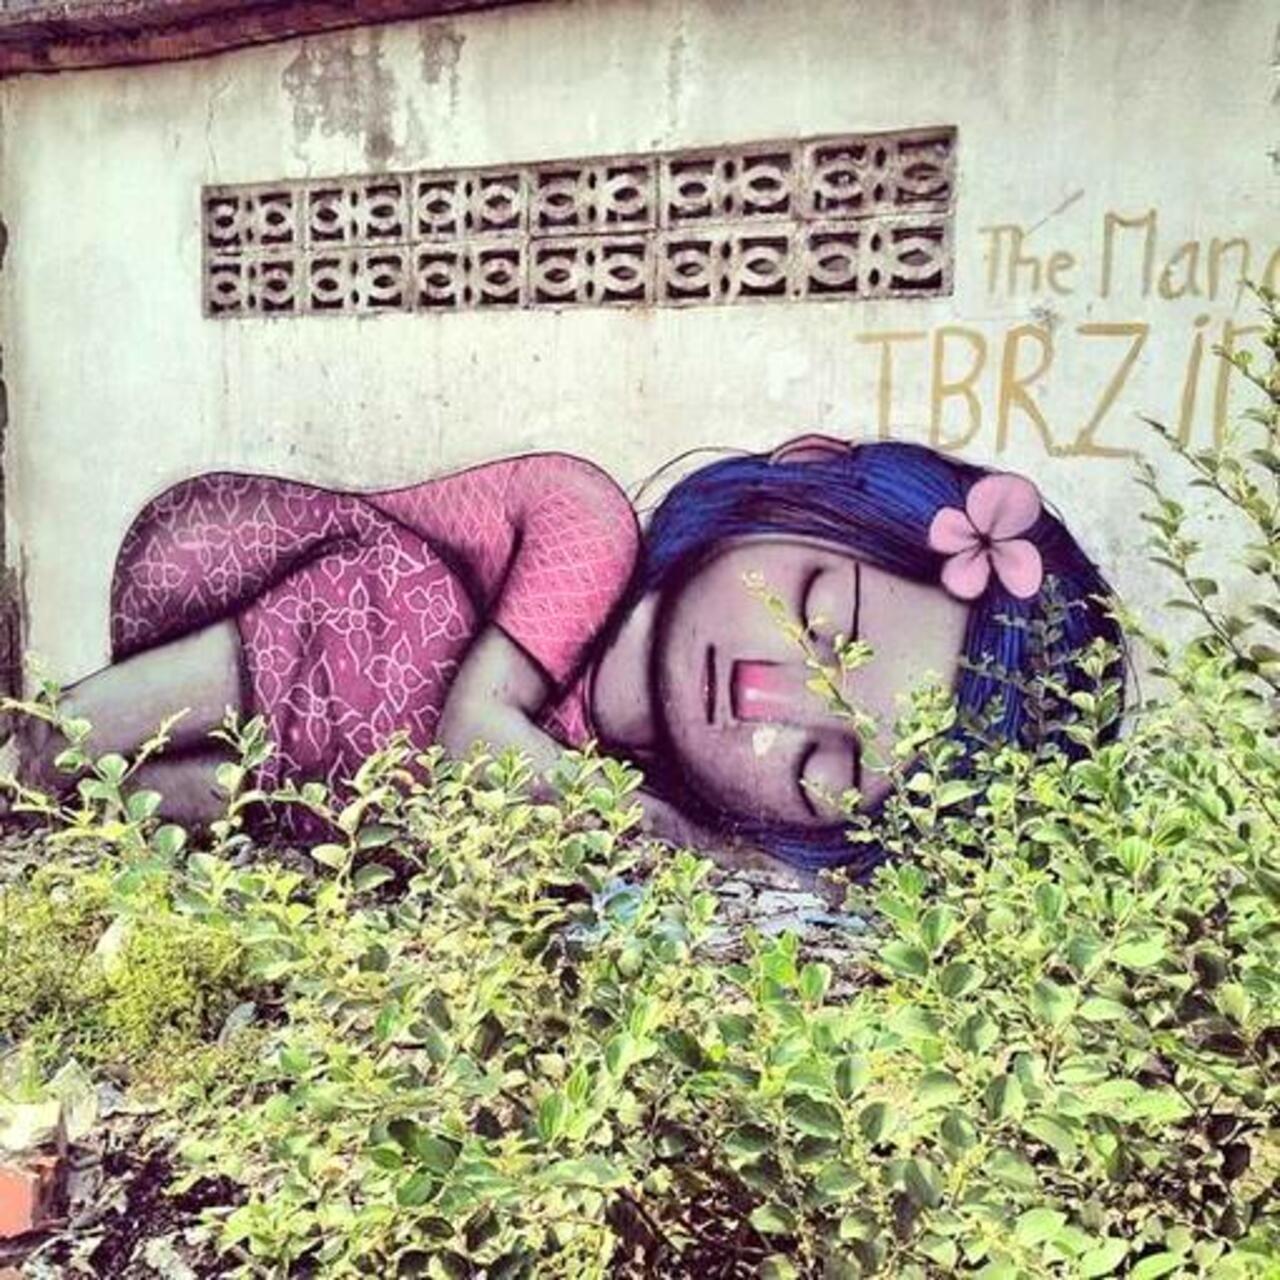 “@Pitchuskita: French artist Seth
Phnom Penh, Cambodia 
#streetart #art #graffiti #mural http://t.co/0PMPMGh20P”